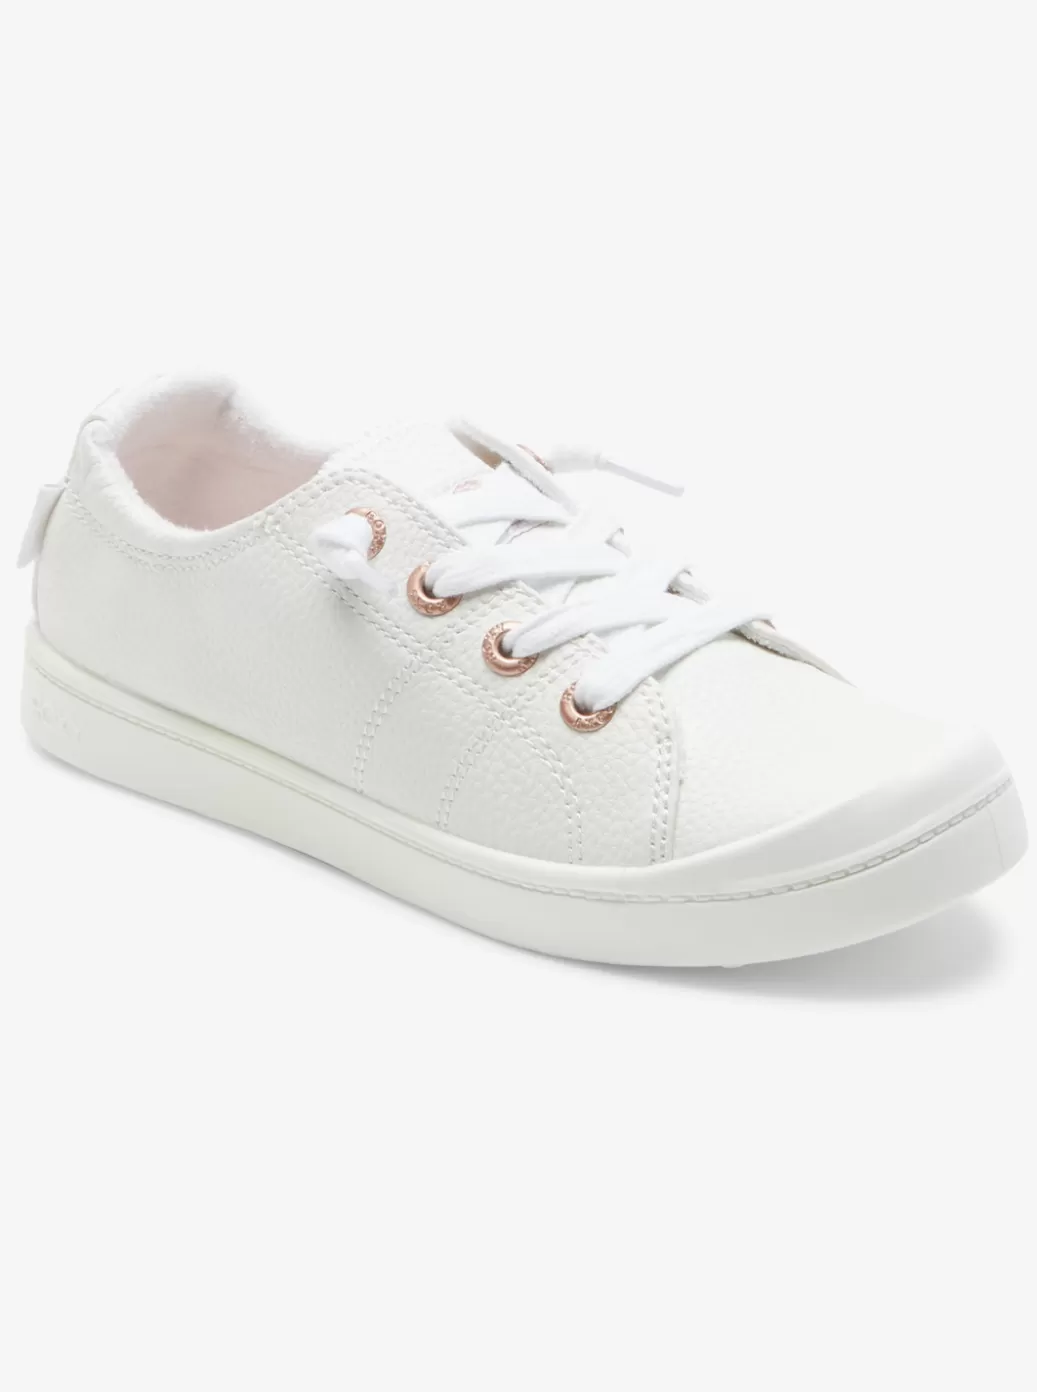 Shoes & Sandals | KIDS ROXY Girl's 4-16 Bayshore Plus Slip-On Shoes White